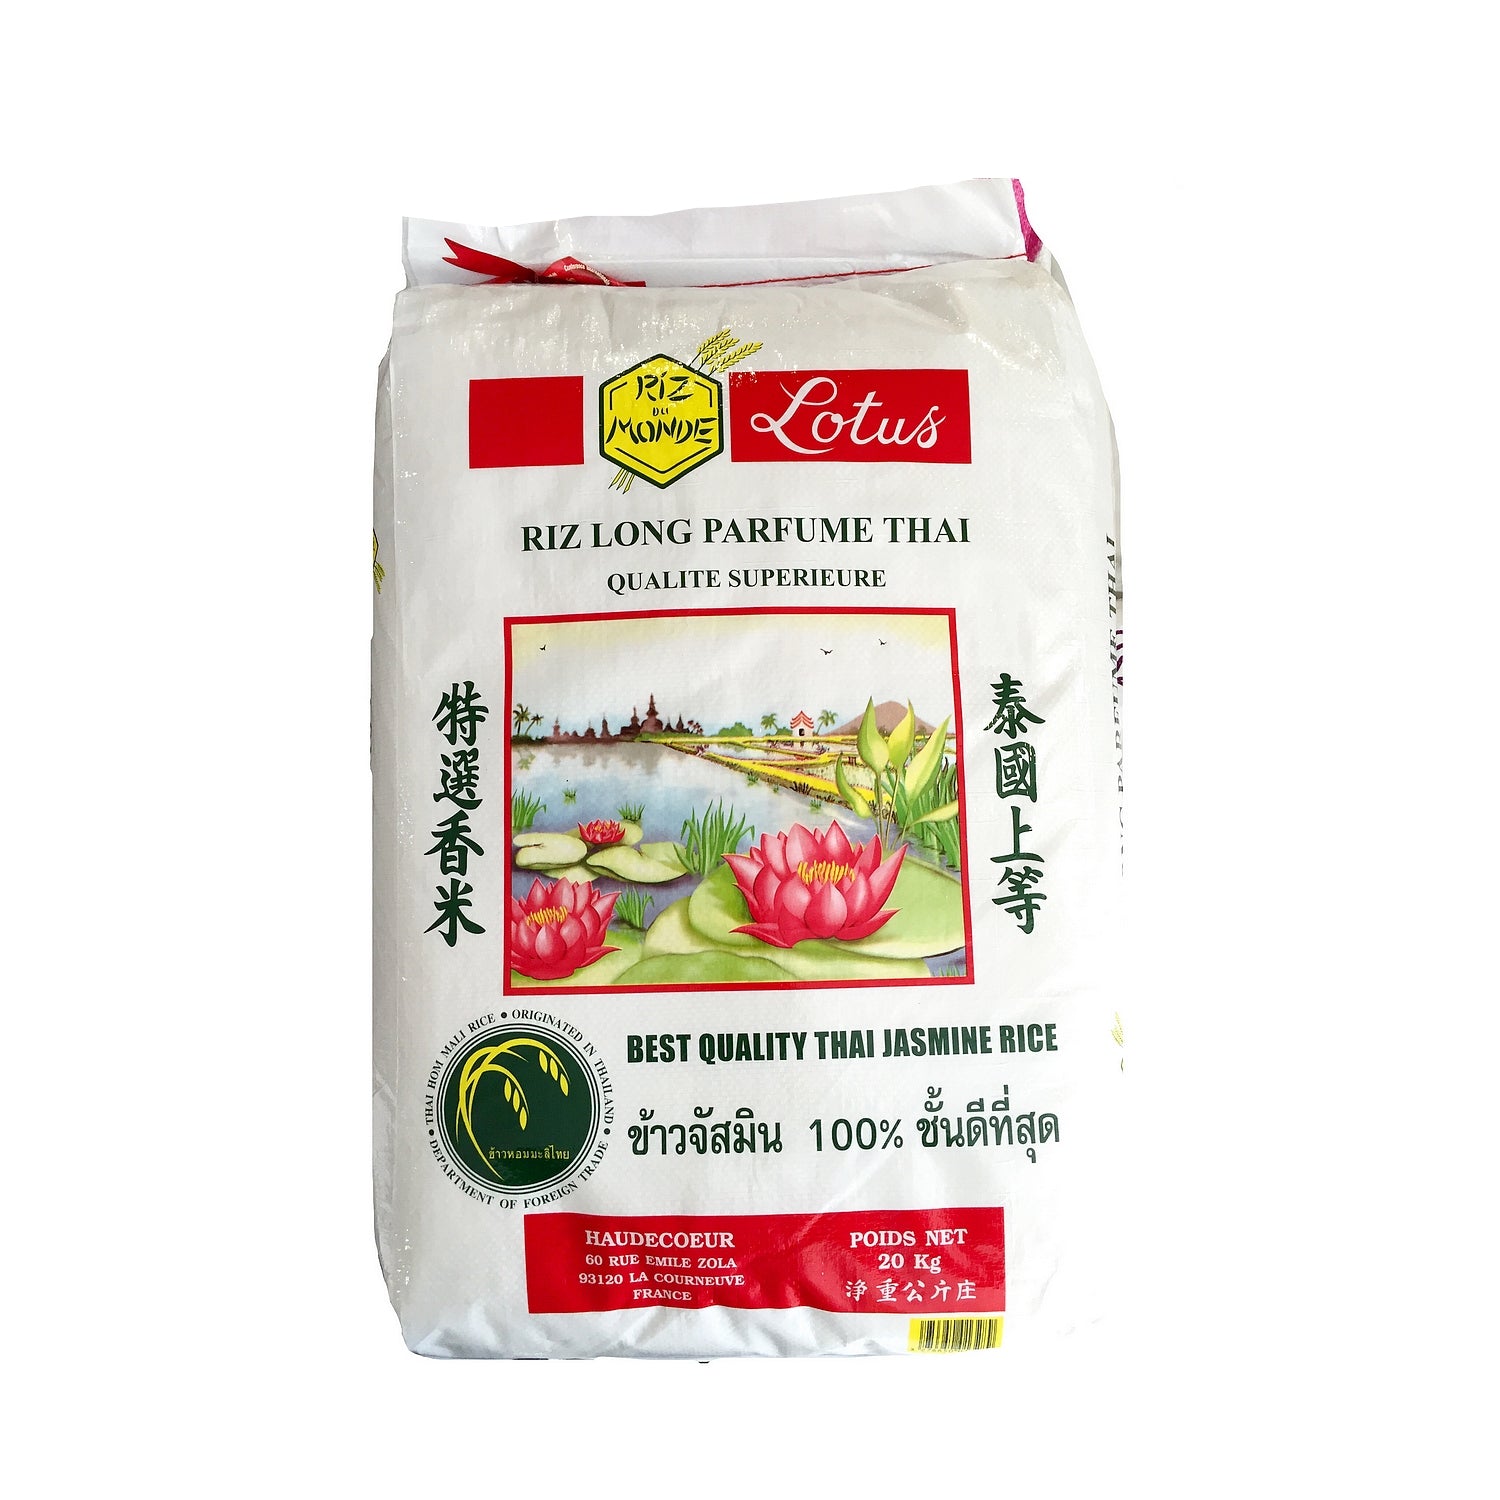 Riz long Cambodge perle d’Asie 20kg